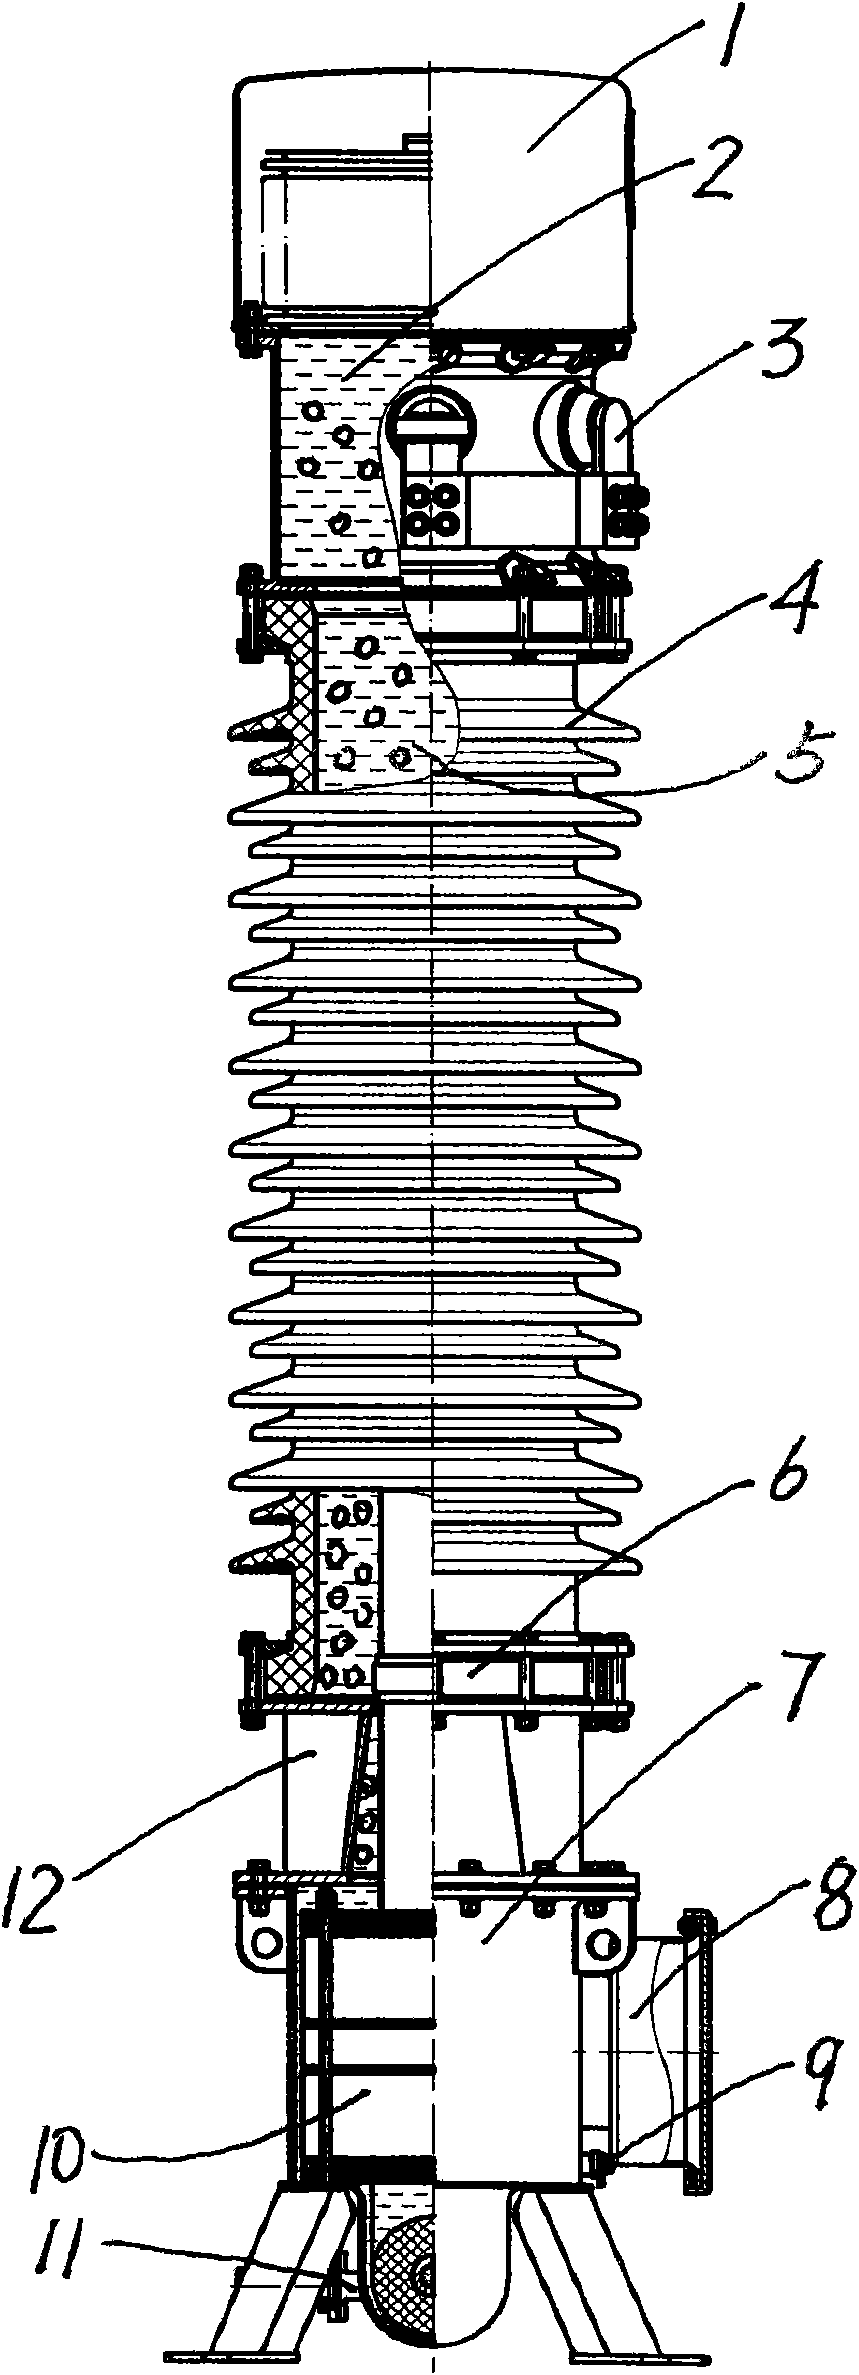 Vertical current transformer